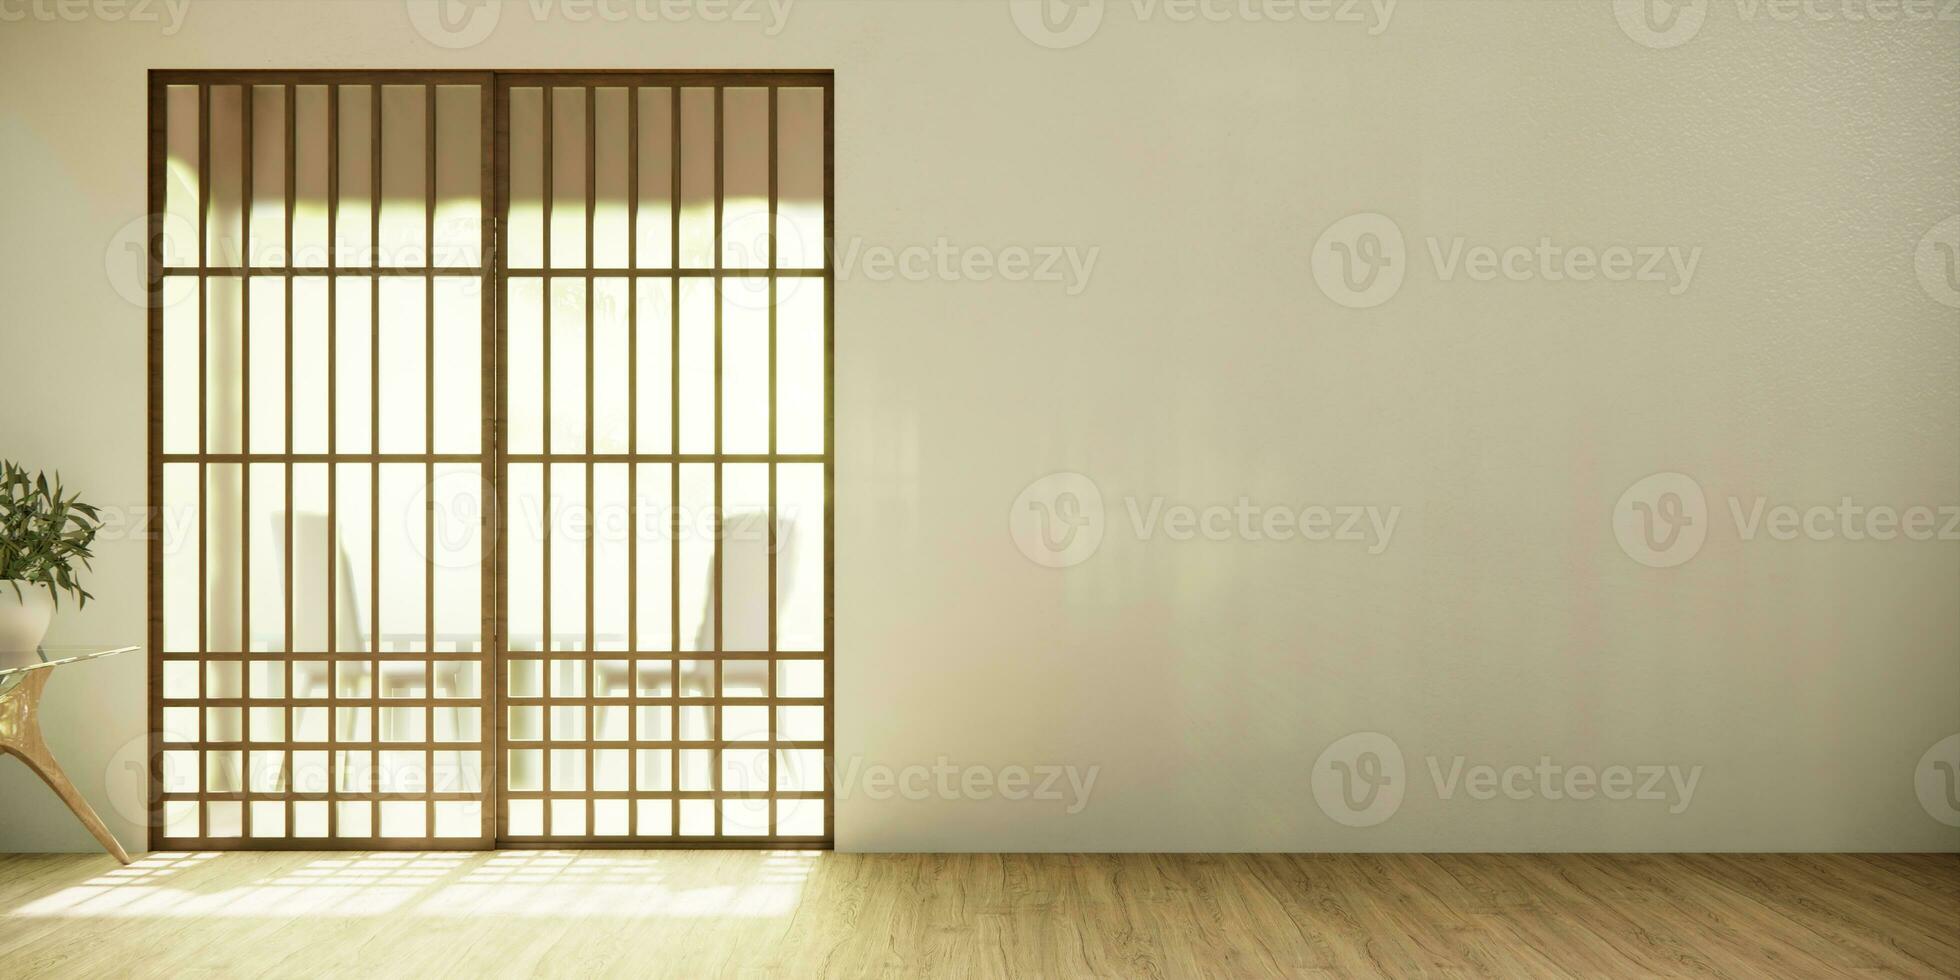 the hallway Clean japanese minimalist room interior, 3D rendering photo